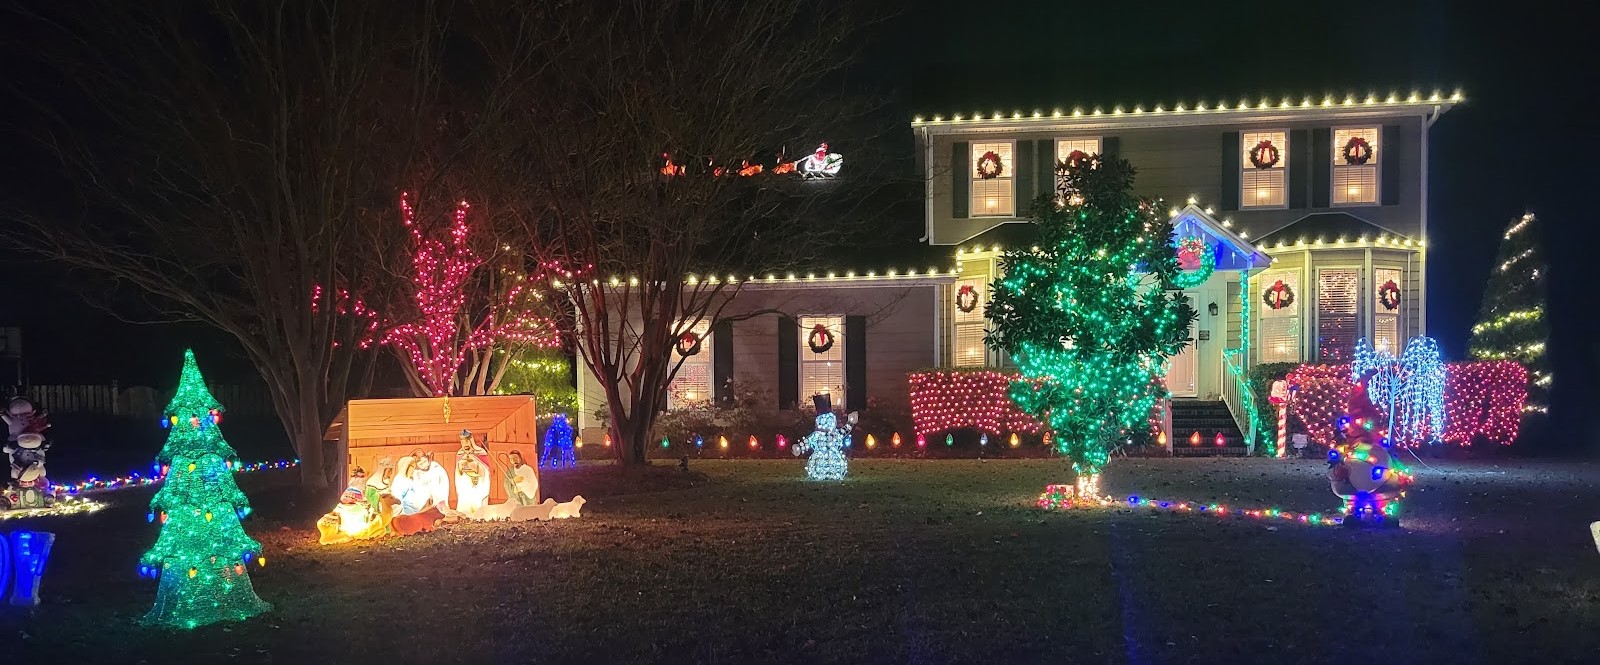 Christmas lights in Wilmington, NC